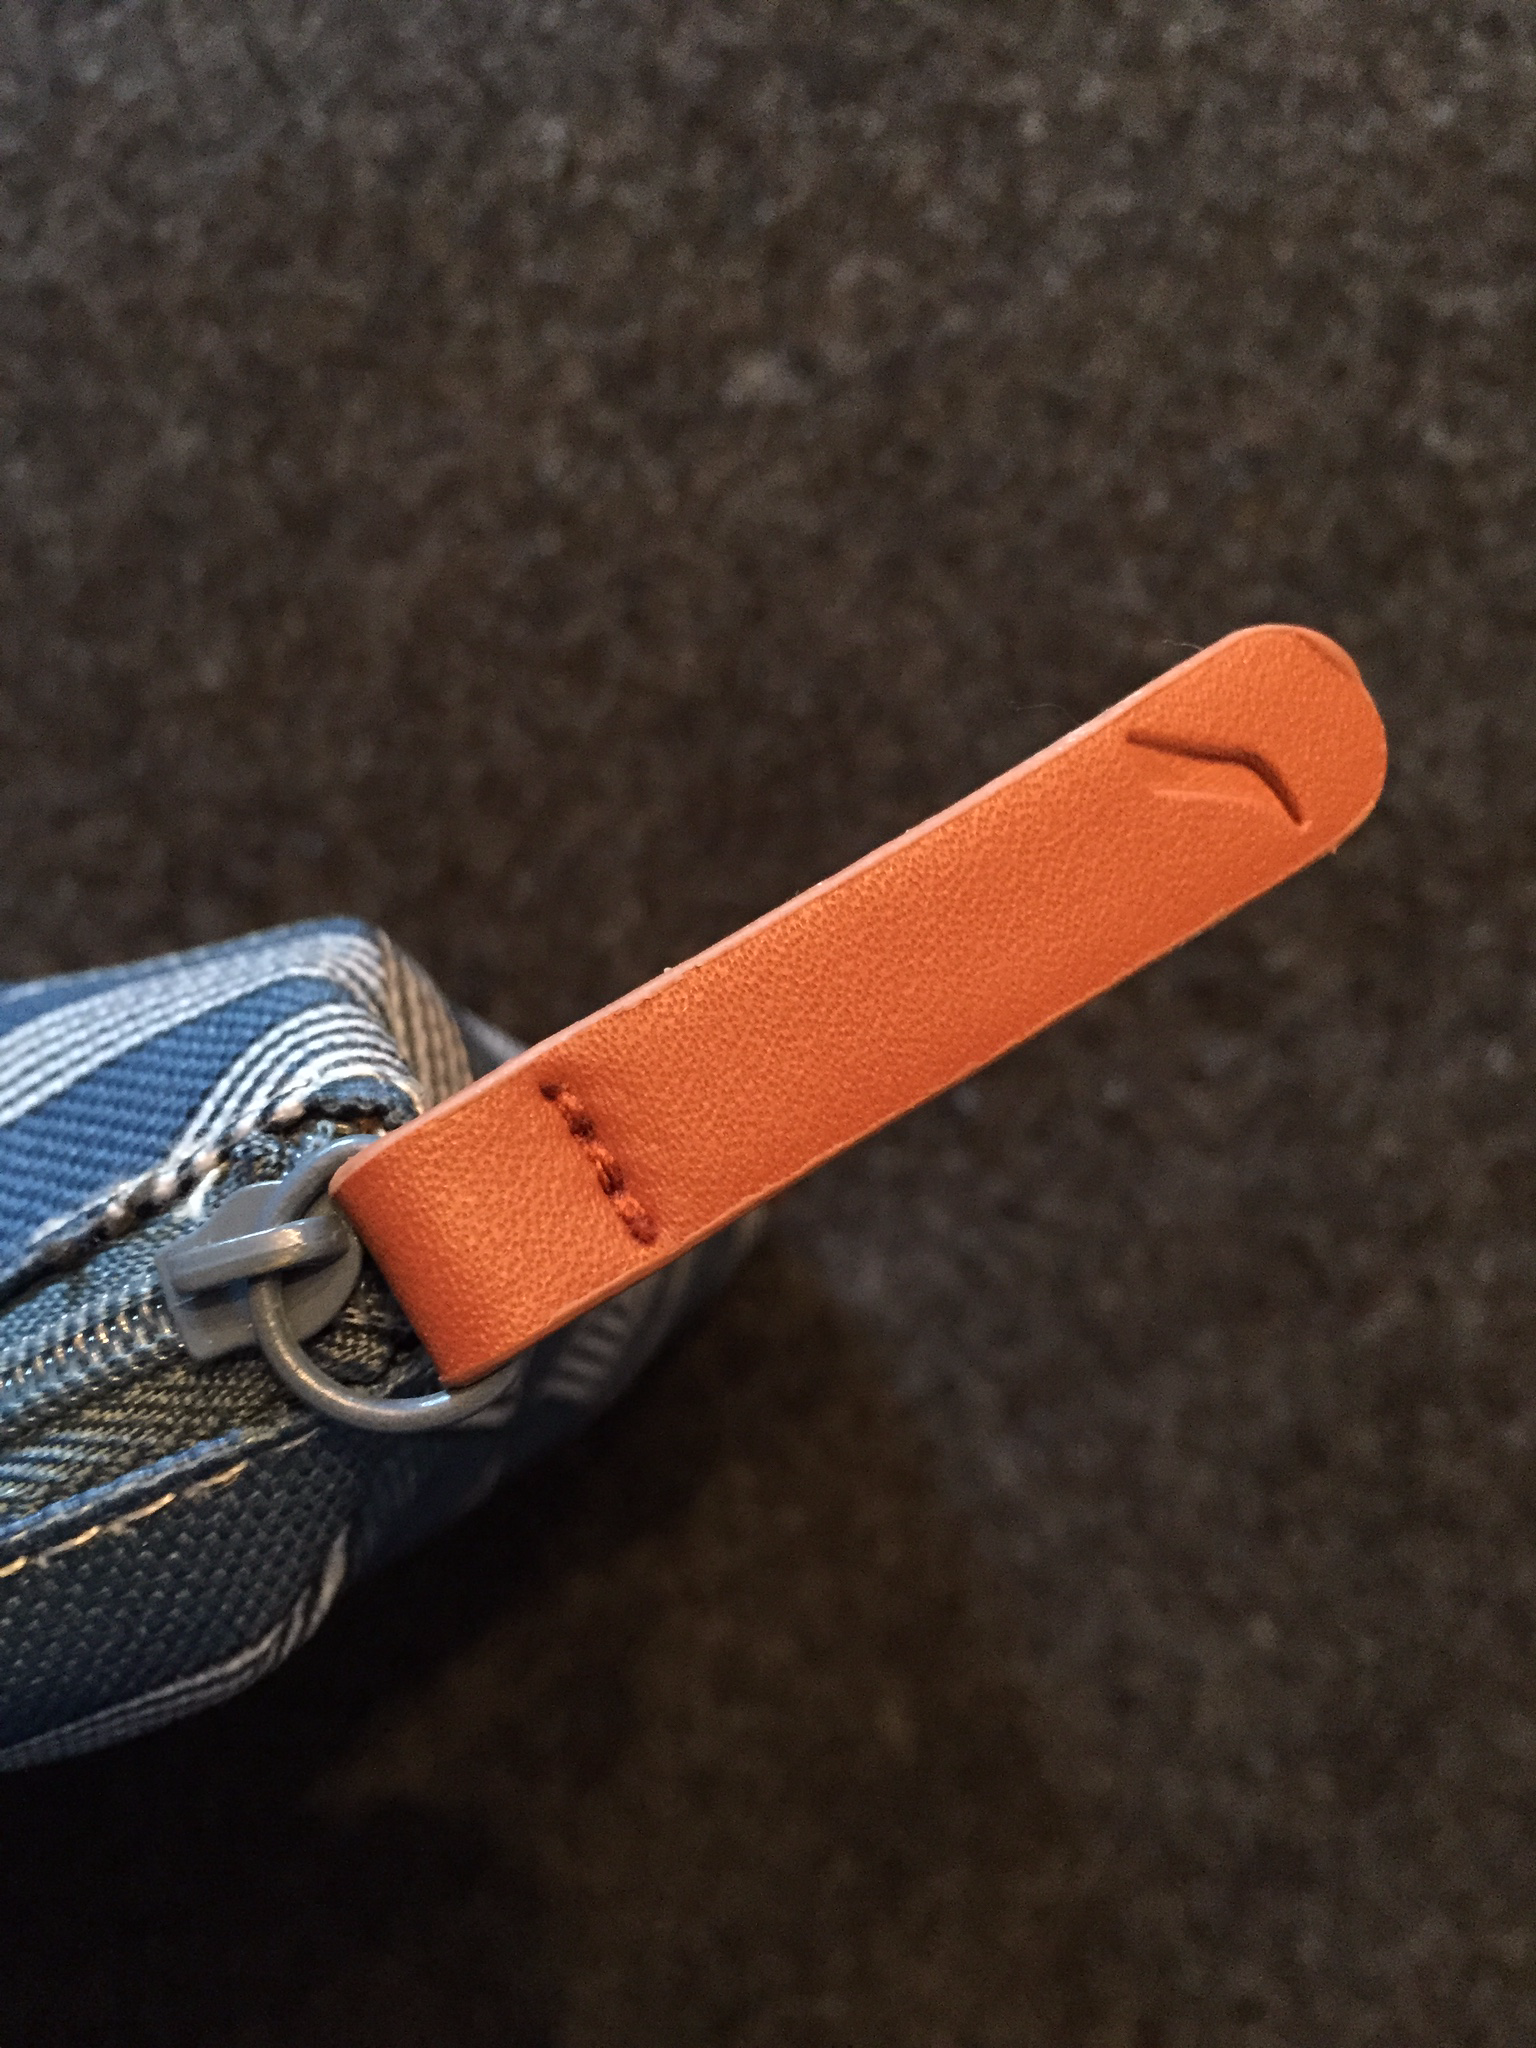 Leather zipper on amenity kit